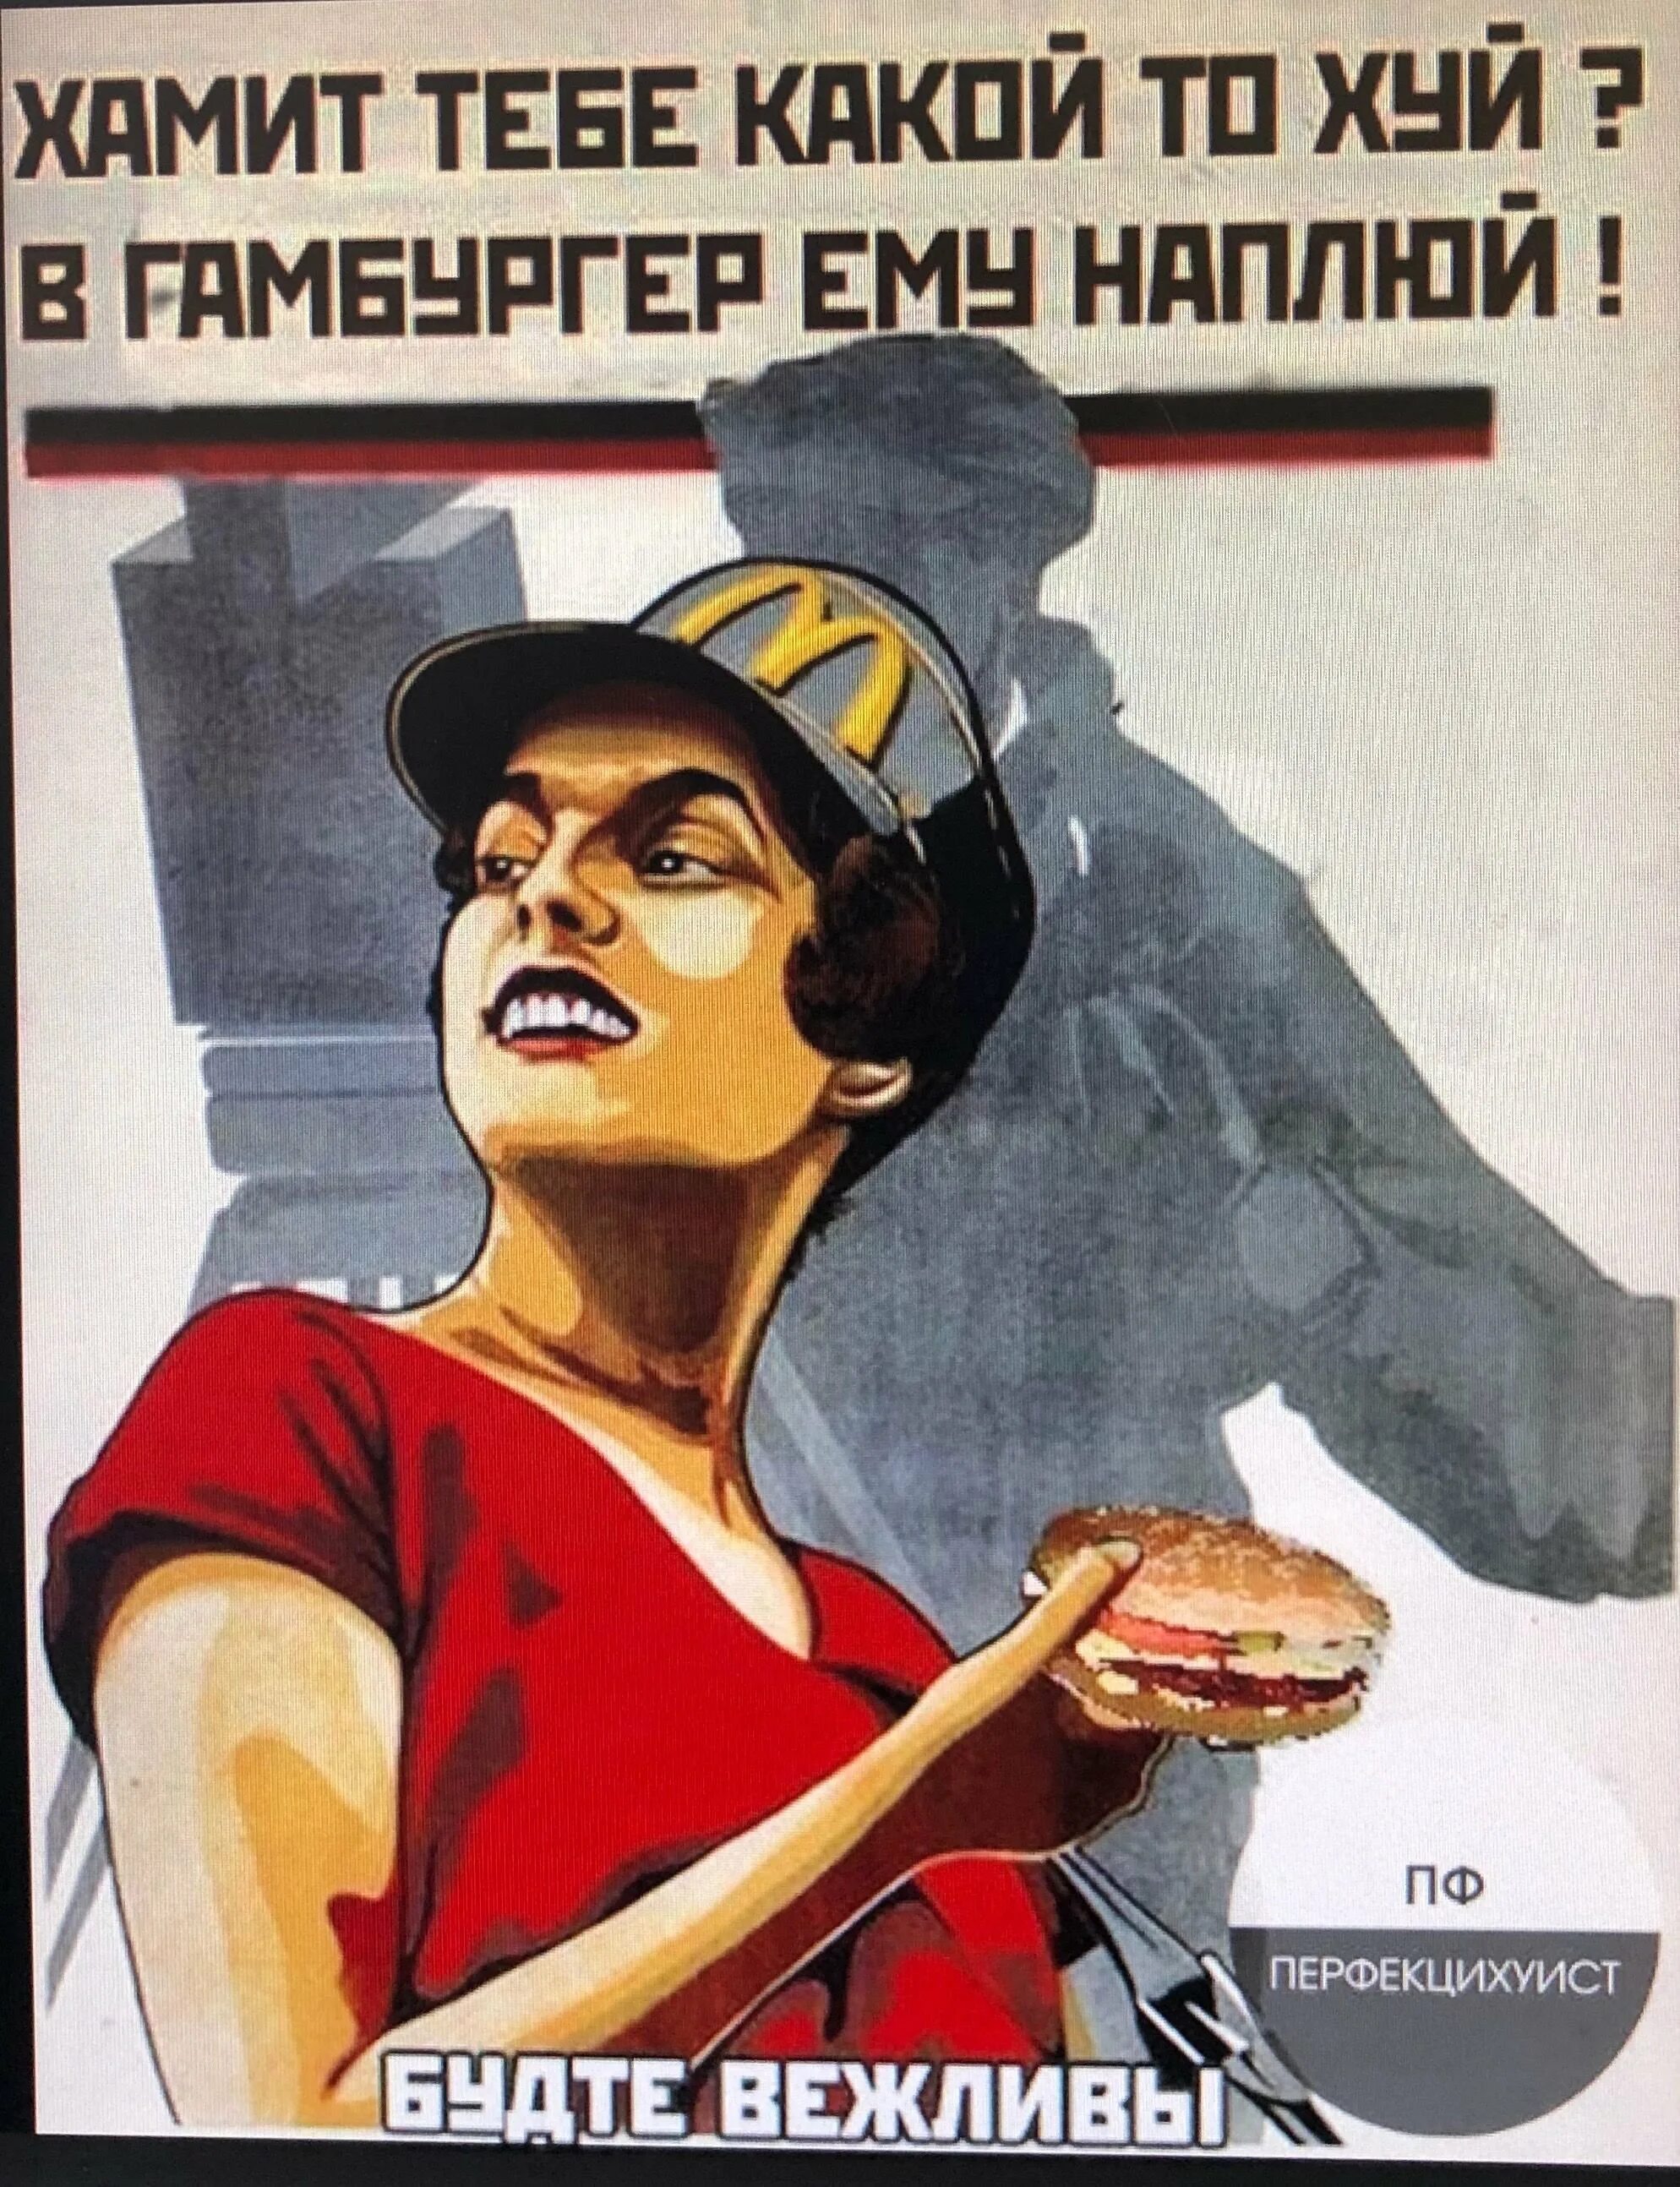 Прикольные плакаты. Прикольные советские плакаты. Юморестические плакат. Переделанные советские плакаты. Великие слоганы